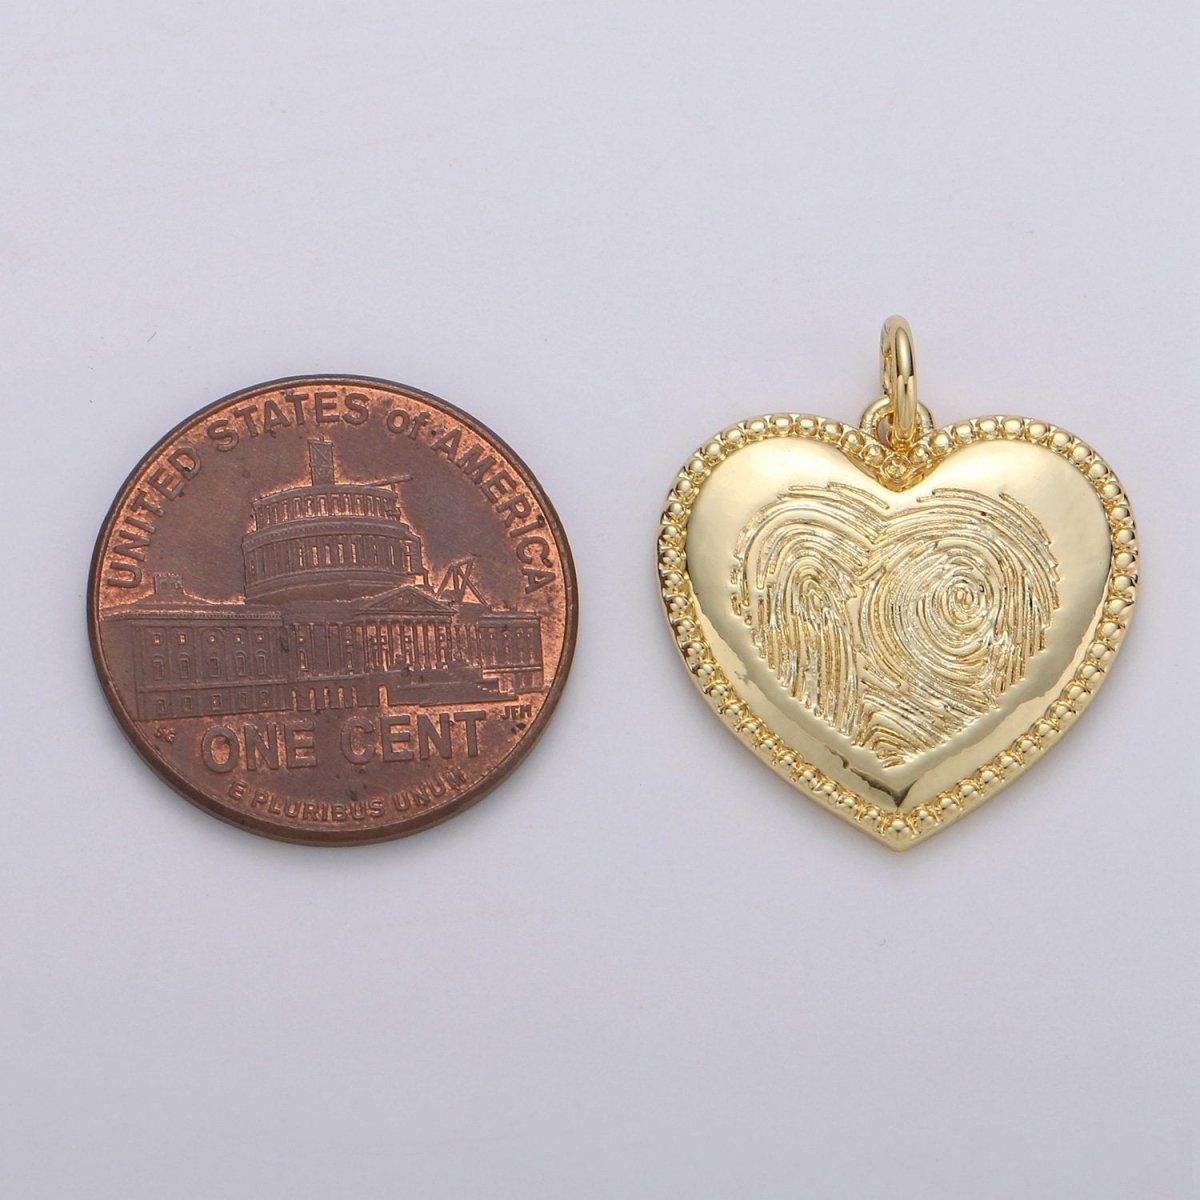 OS DEL - 14k Gold Filled Patterned Heart Charm, Heart Pendant Charm, Gold Filled Charm, For DIY Jewelry, Gold Color D-677 - DLUXCA